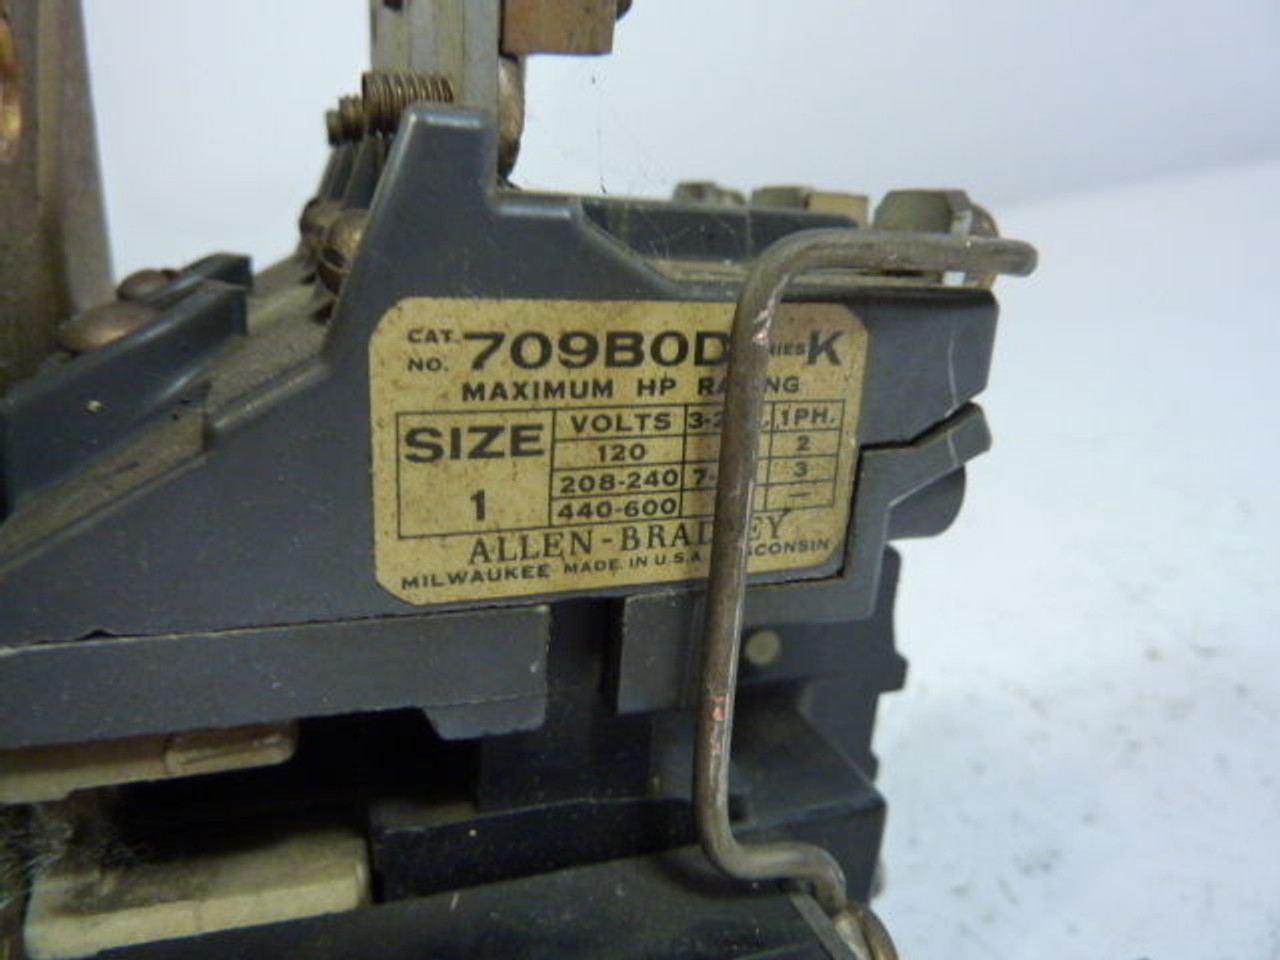 Allen-Bradley 709-BOD Series K Starter Size 1 3-Pole 120V BROKEN TOGGLE USED